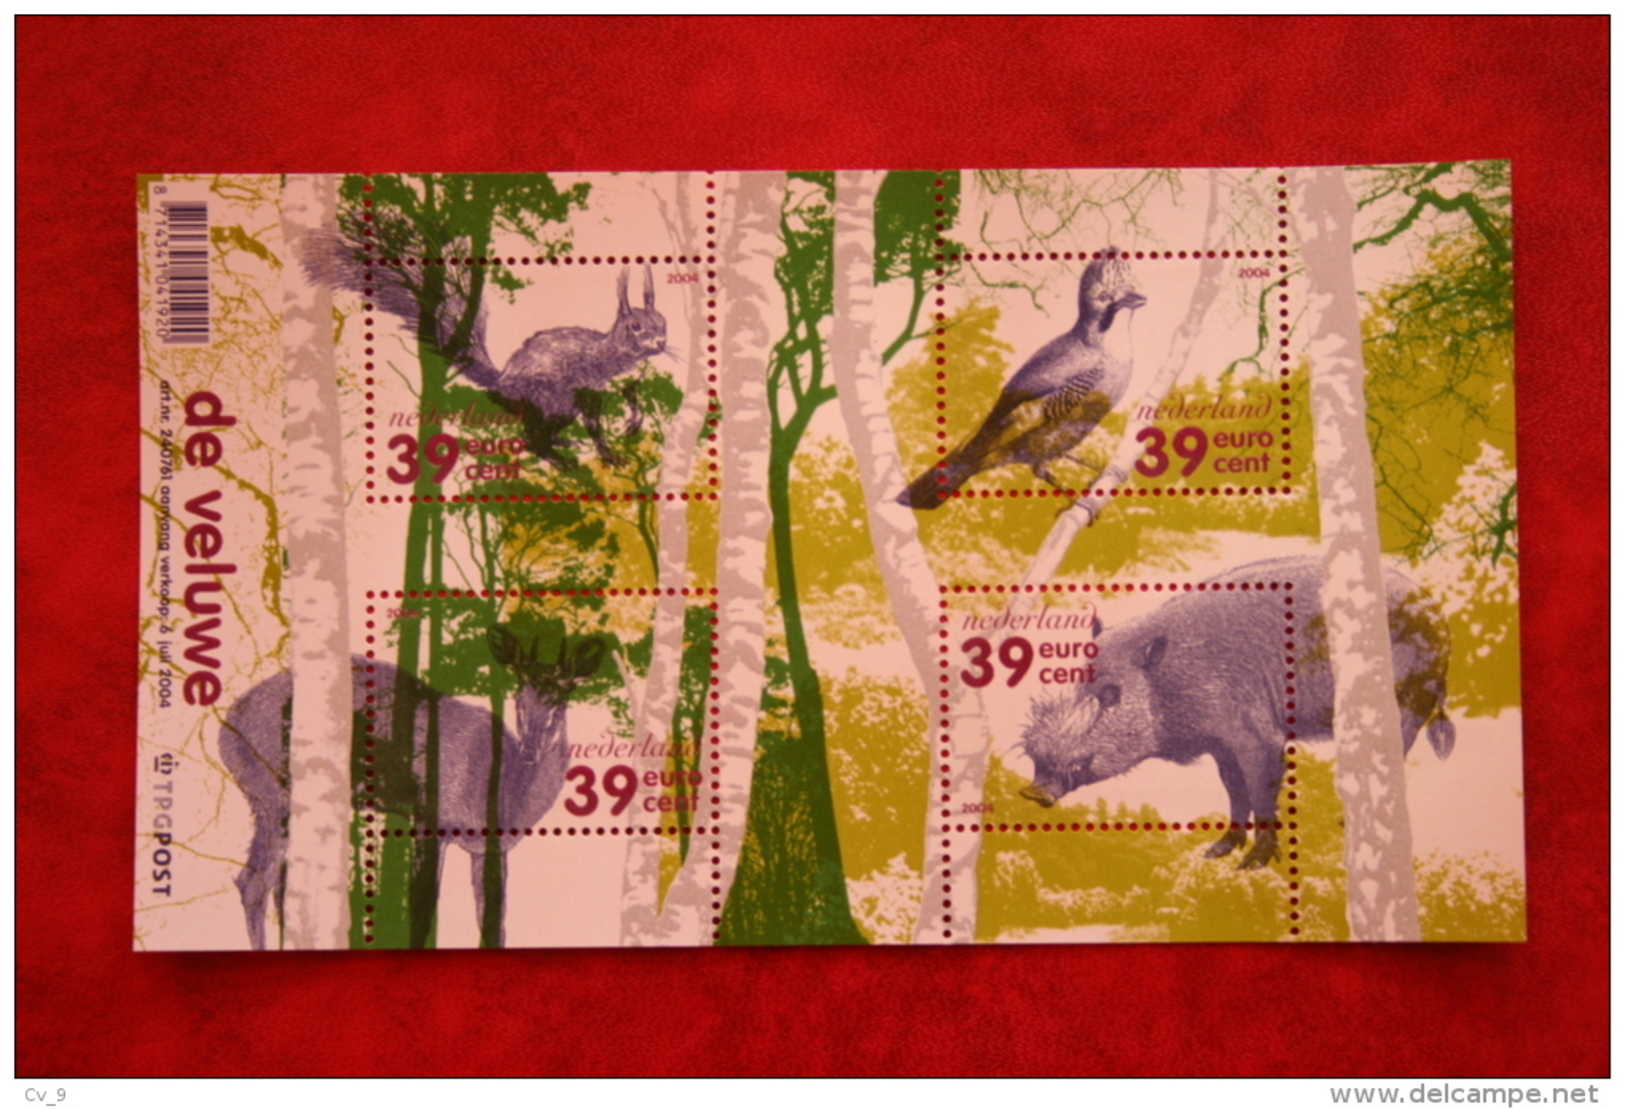 De Veluwe Deel 1 ; NVPH 2282 (Mi Block 81) ; 2004 POSTFRIS / MNH ** NEDERLAND / NIEDERLANDE / NETHERLANDS - Unused Stamps